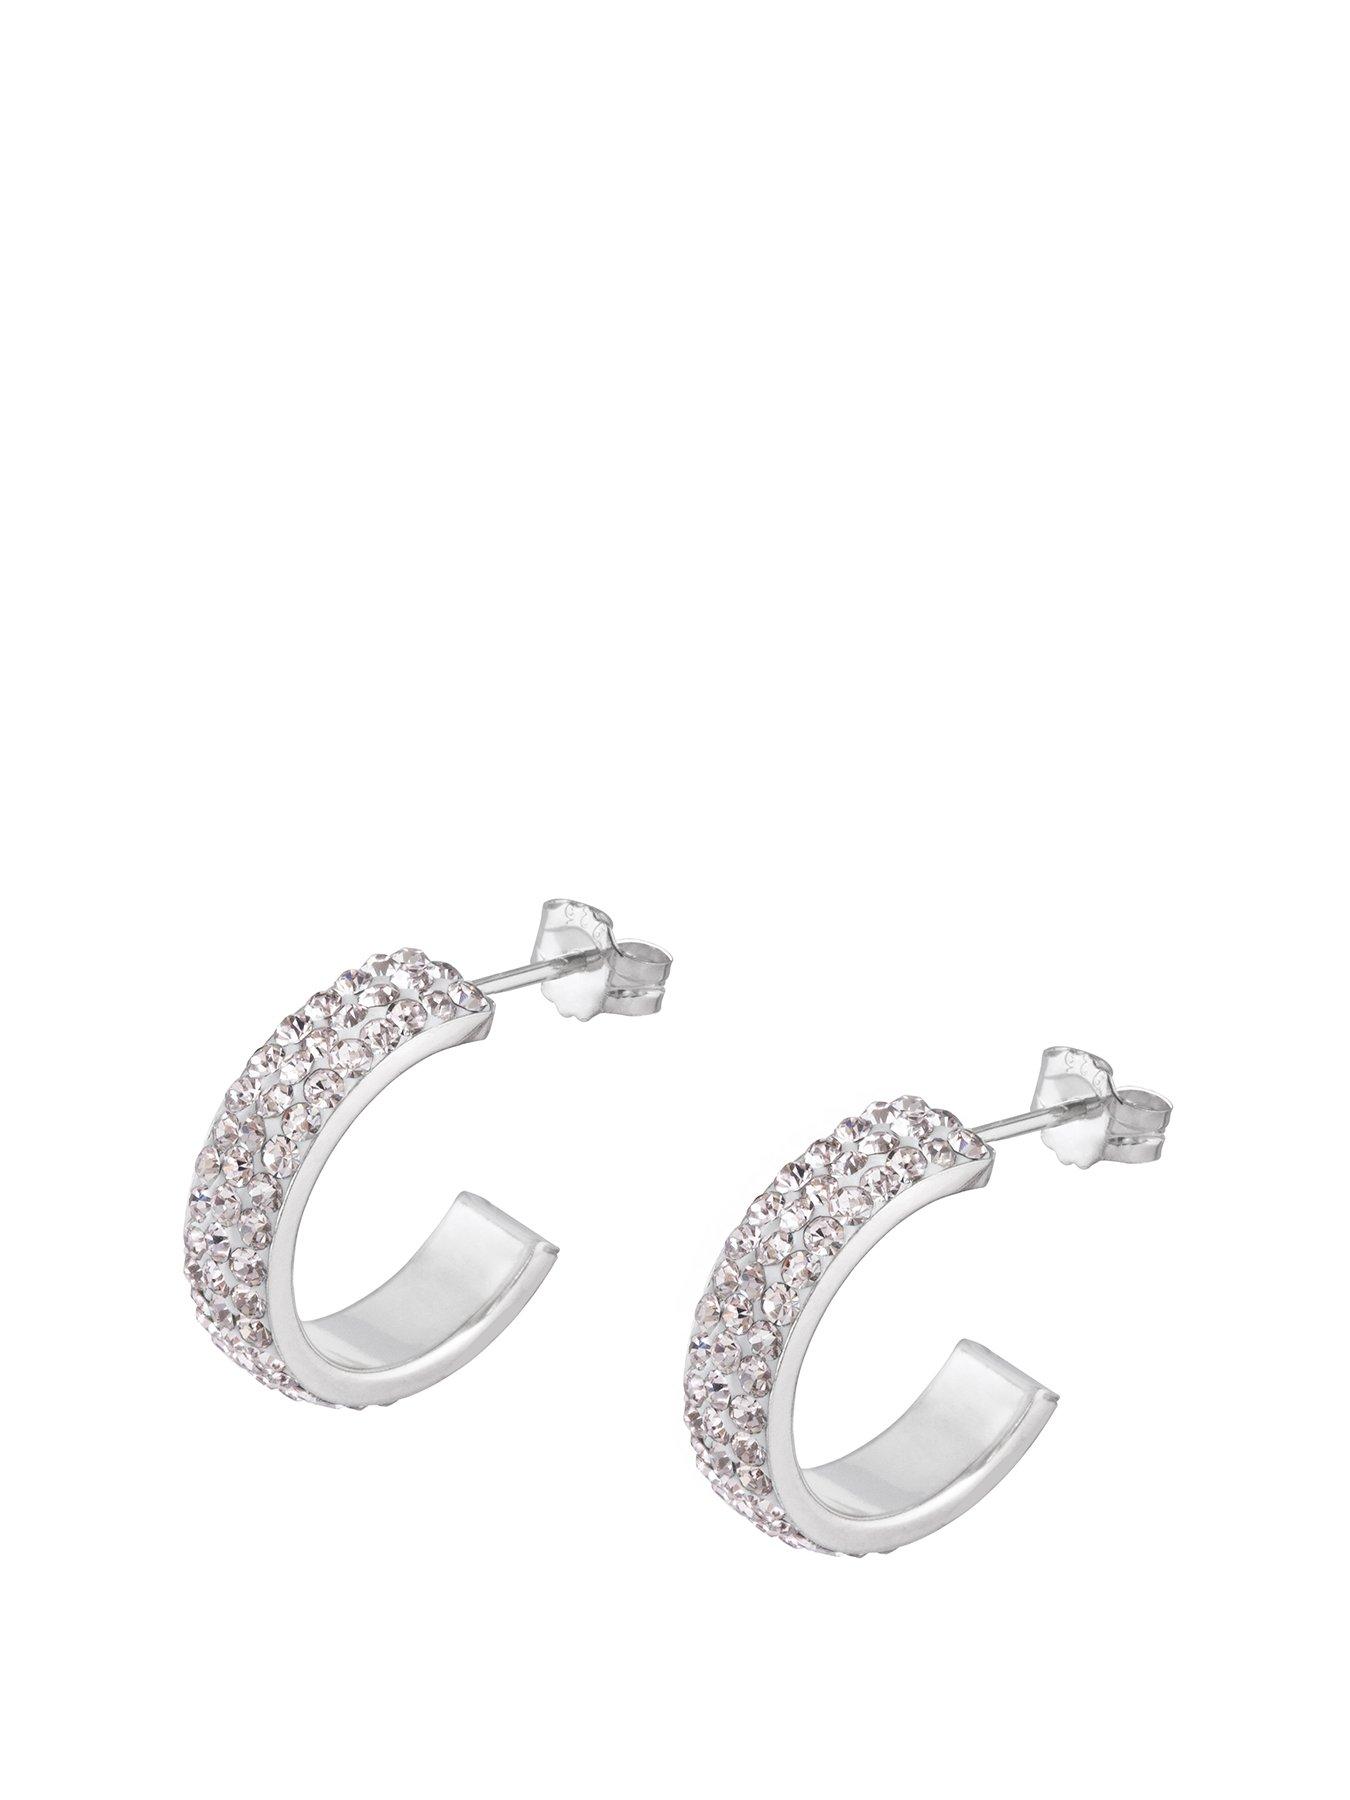 Details about   Goldenstar 0.25Ct Blue Diamond Hoop Earrings 